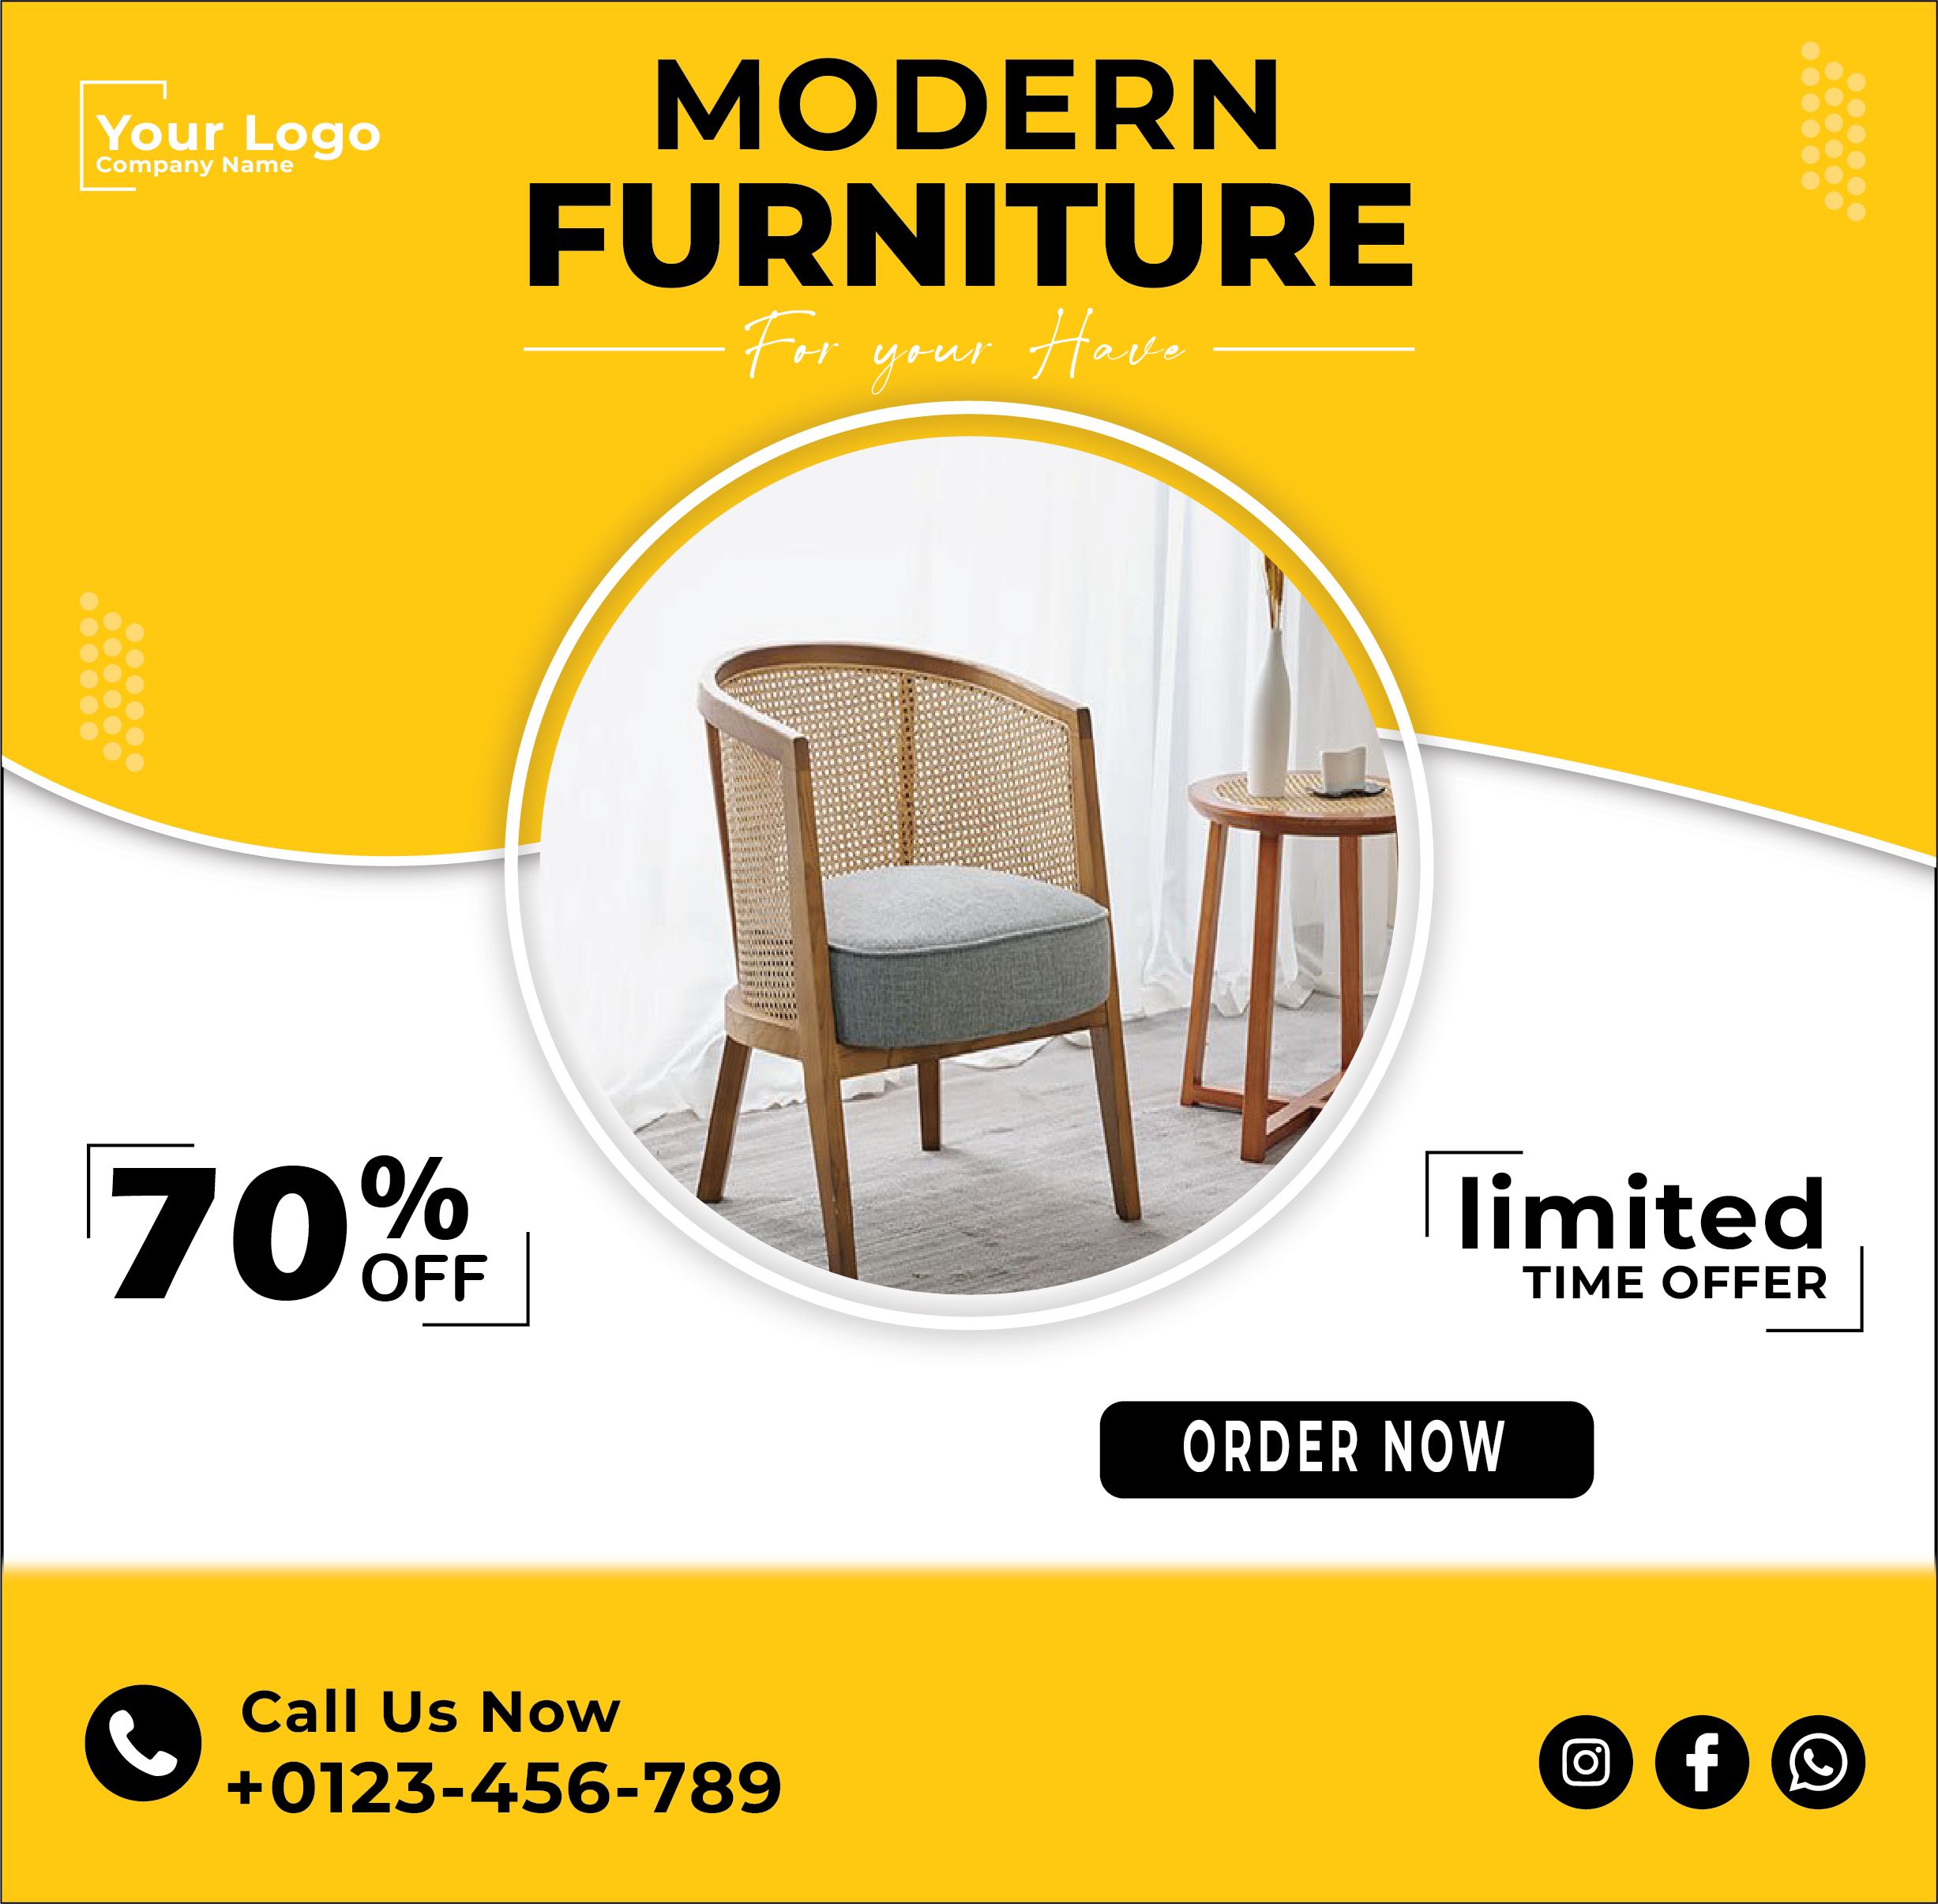 Modern Furniture Special Offer Creactivity & Design in Adobe ilustration  For Free In Corel Draw Design